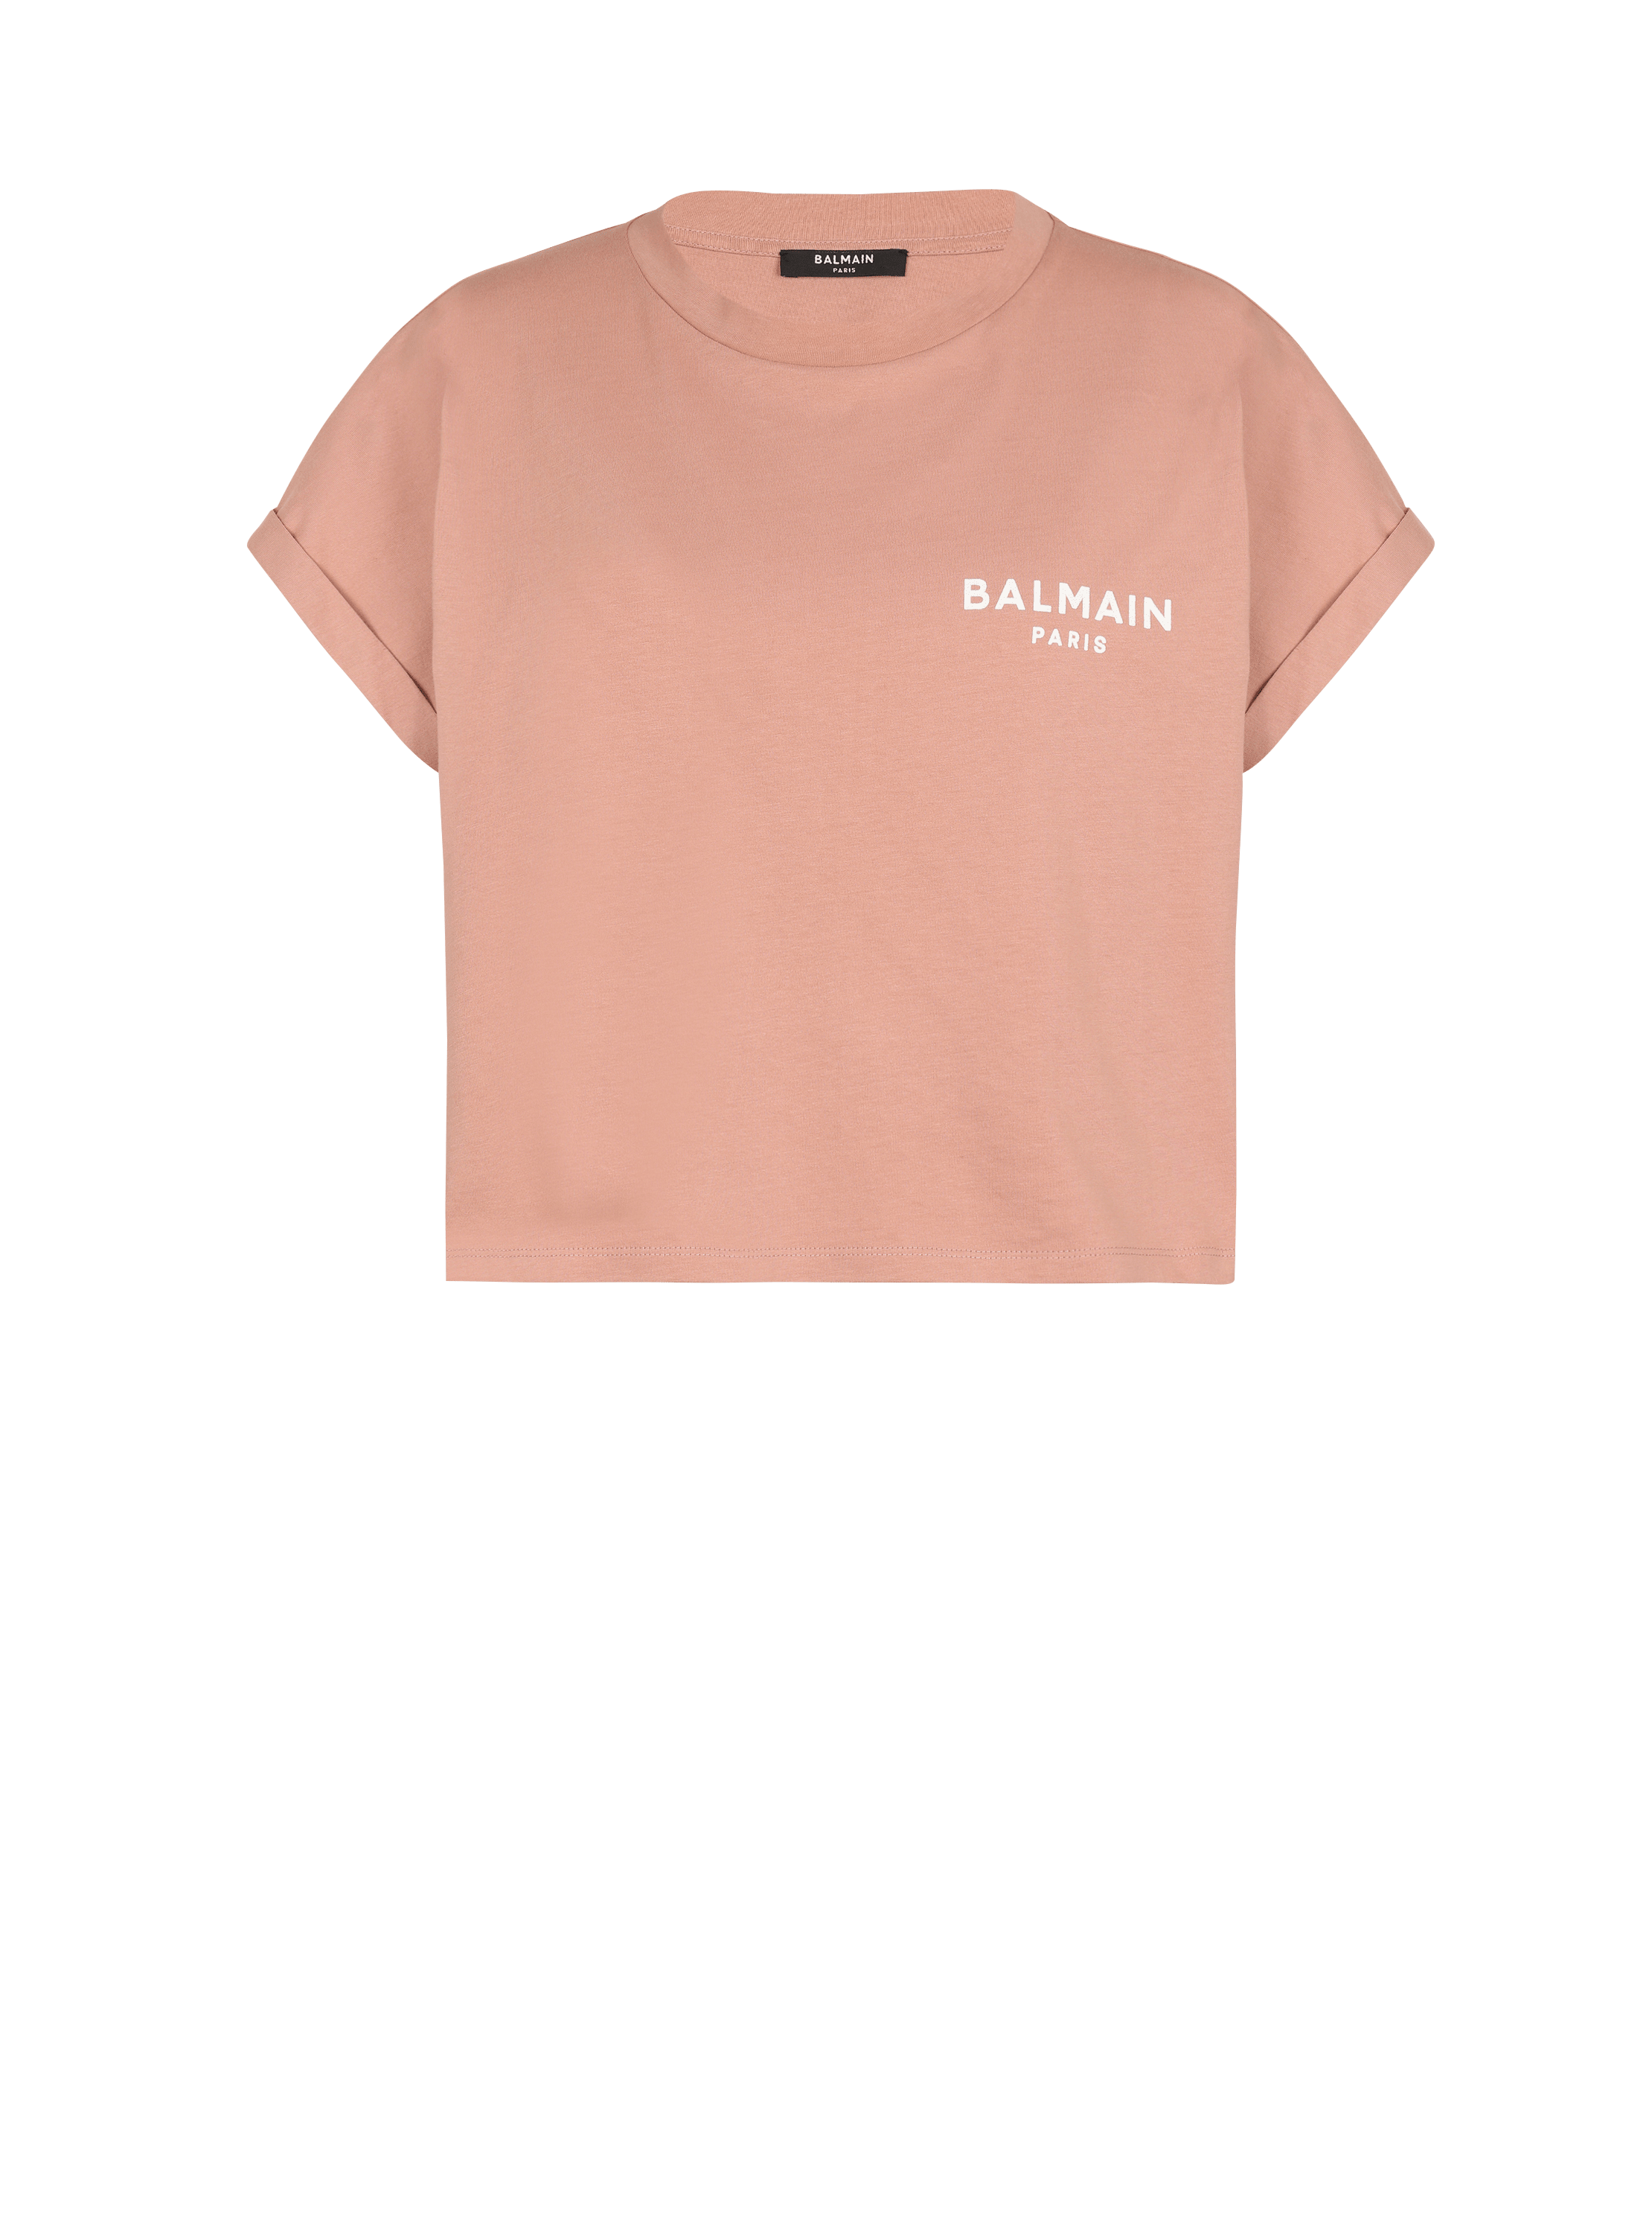 Kurzes T-Shirt aus Öko-Baumwolle mit aufgedrucktem Balmain-Logo, rosa, hi-res